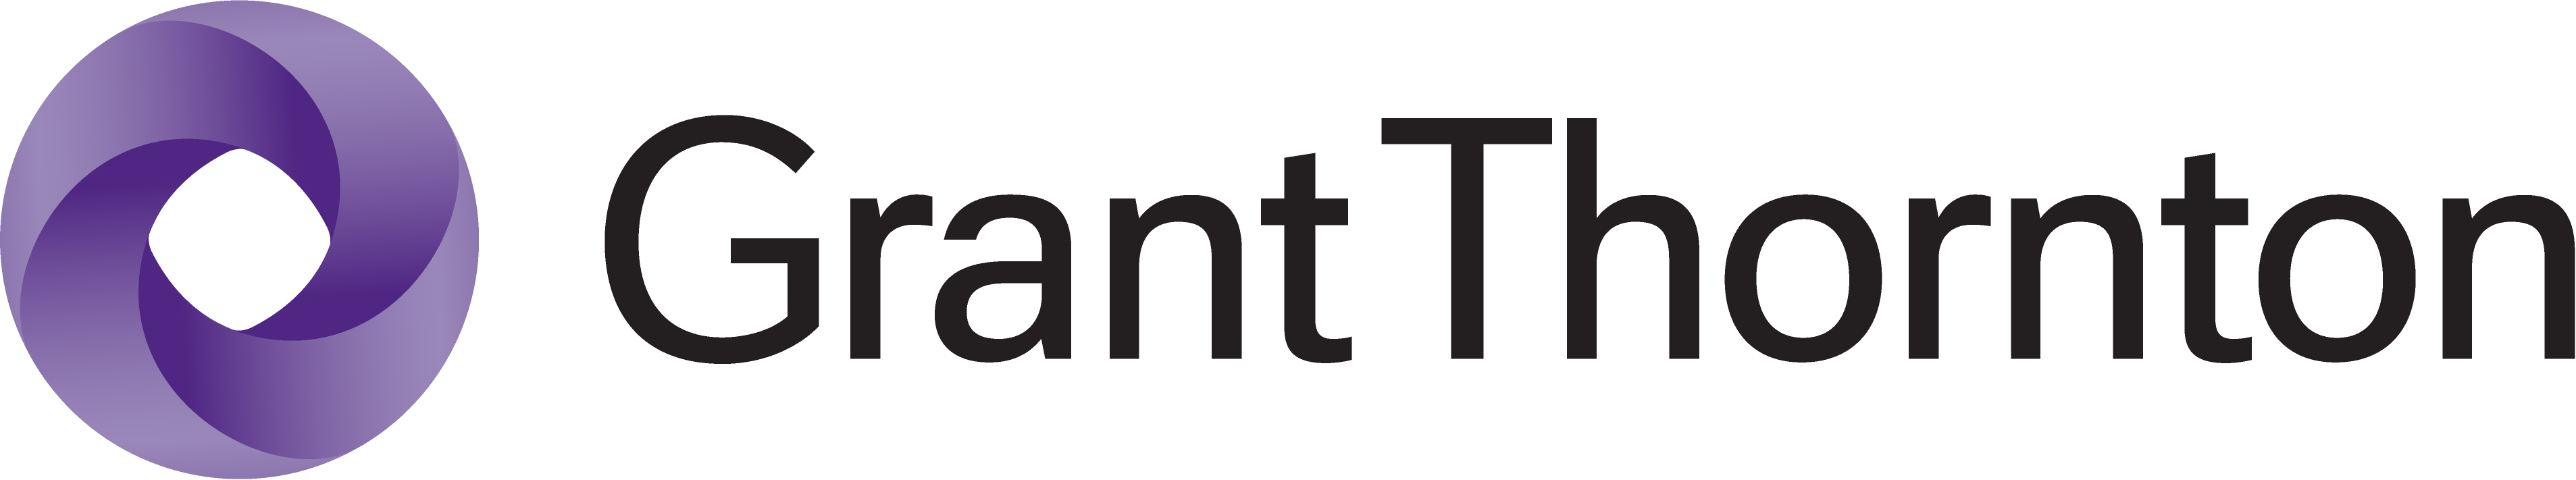 Grant Thornton LLP Company Logo